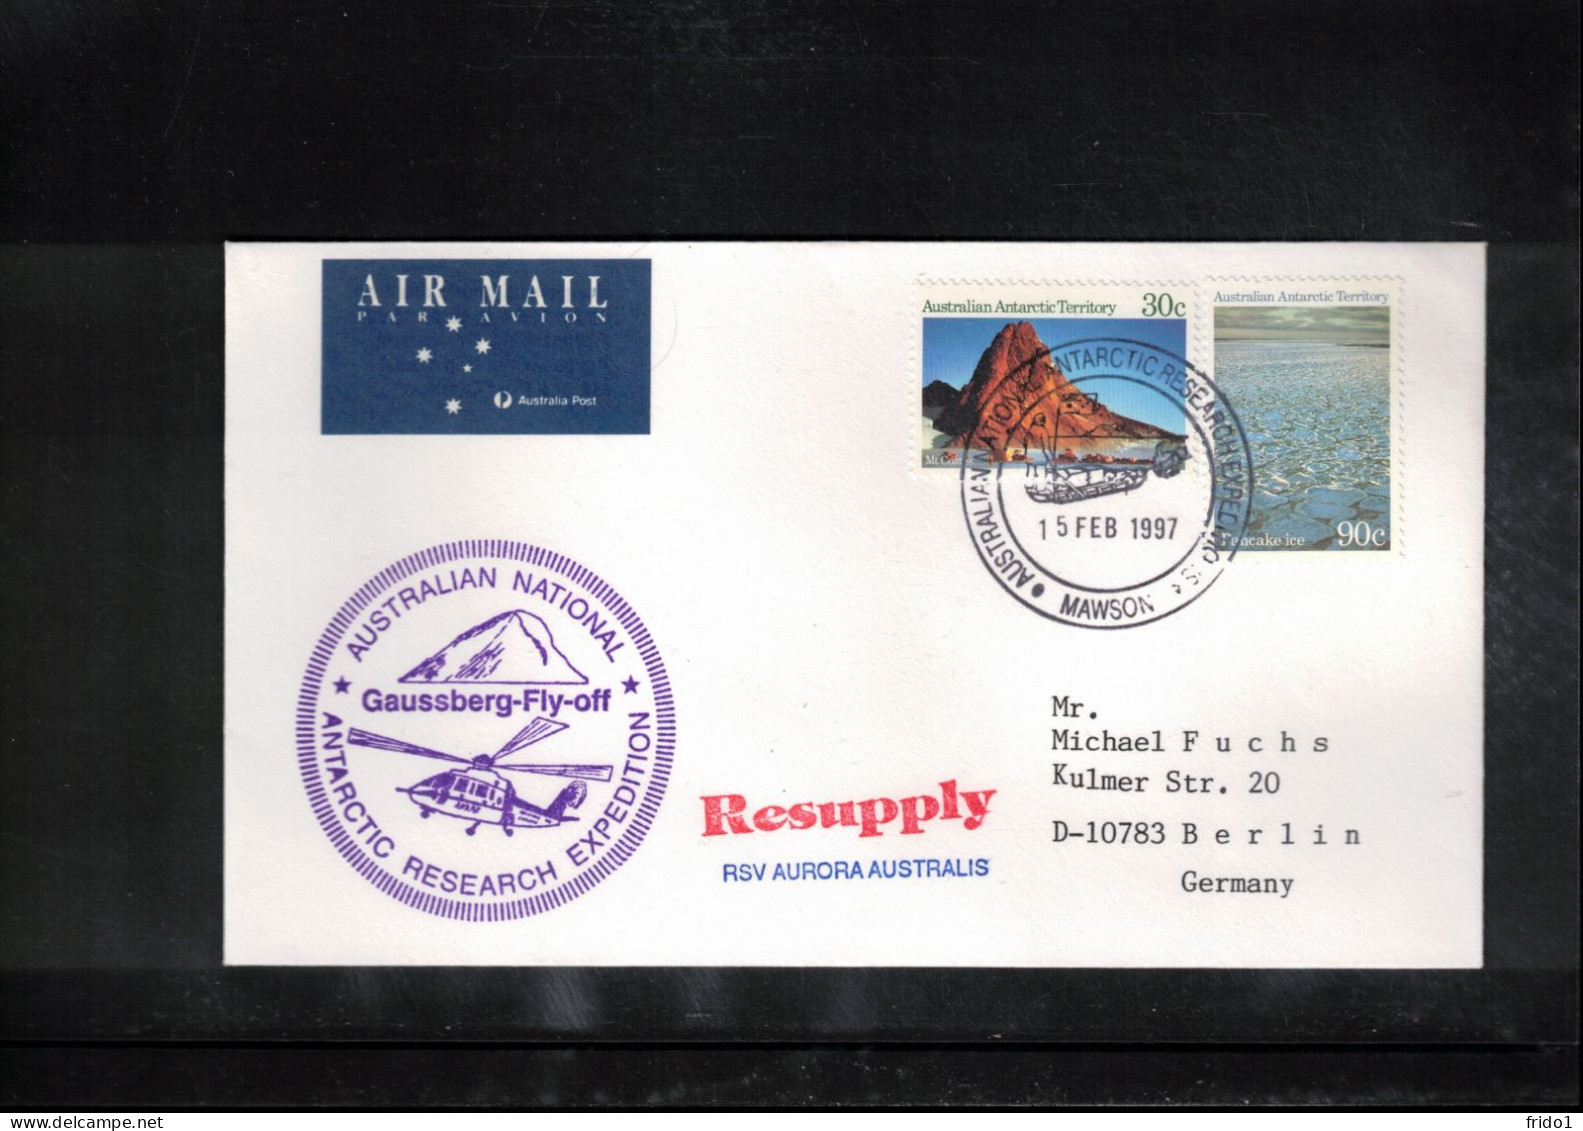 Australian Antarctic Territory 1997 Base Mawson- Supplyship AURORA AUSTRALIS Interesting Helicopter Cover - Covers & Documents